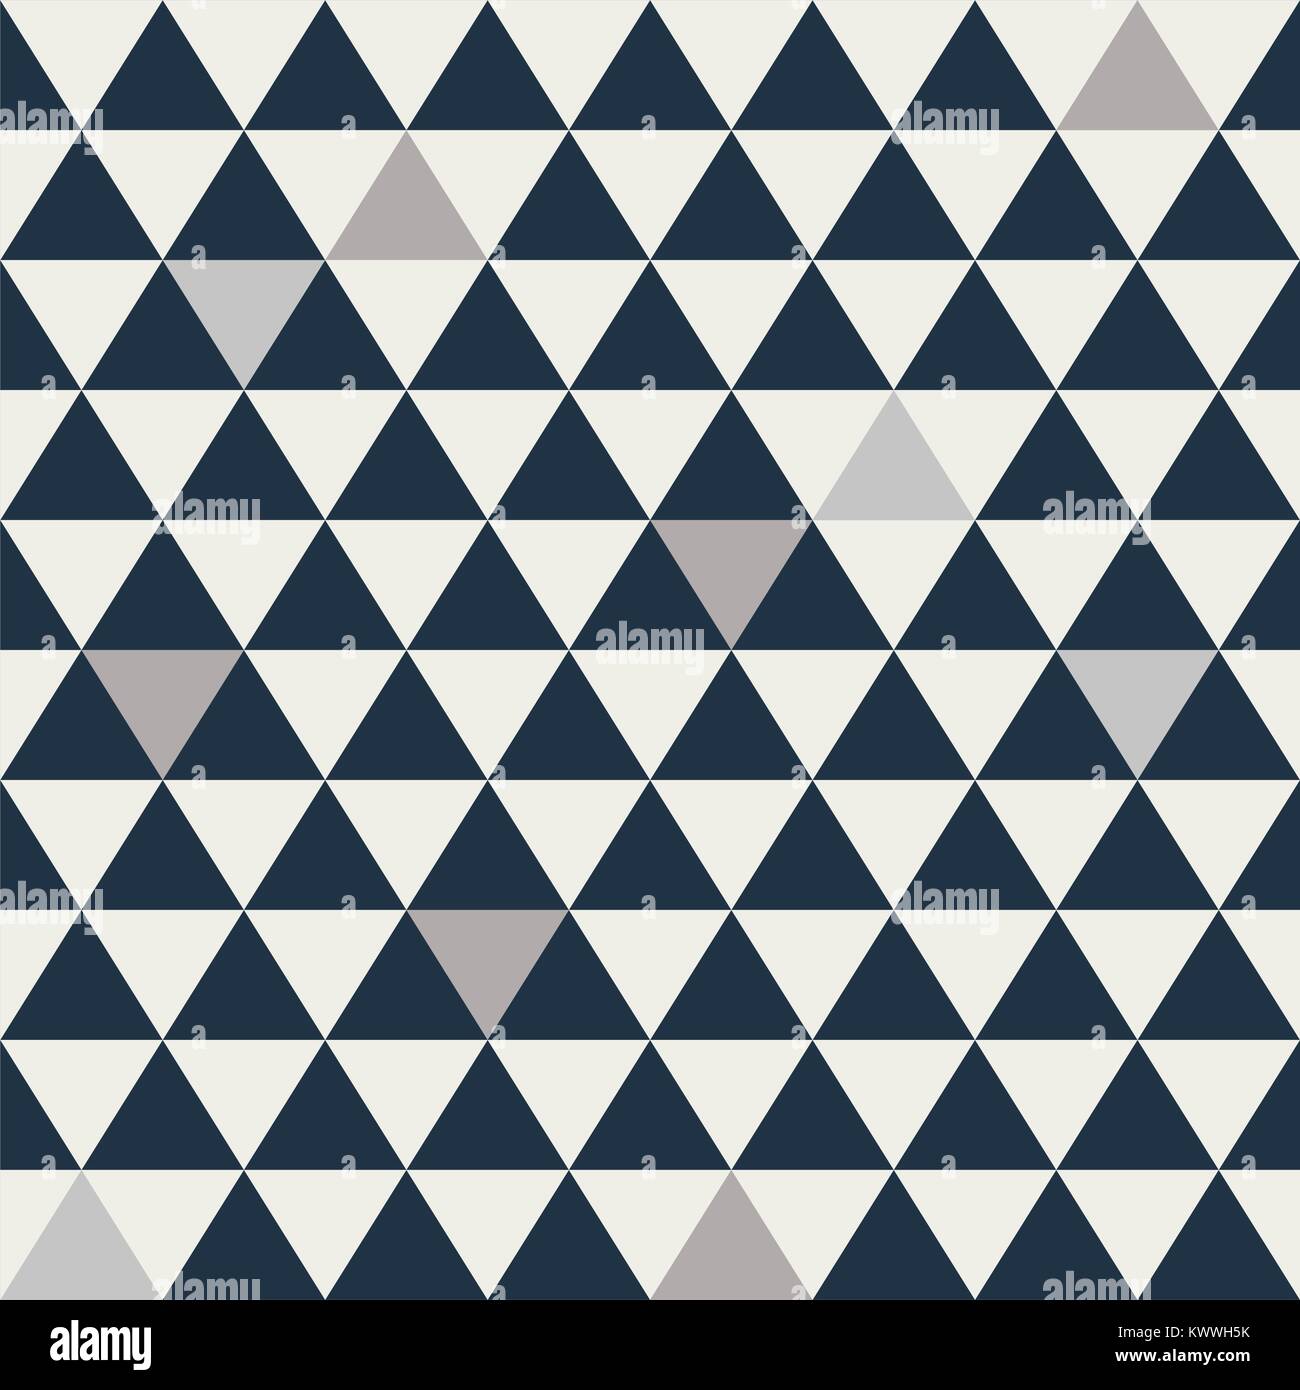 Blaue und graue Dreieck nahtlose Vektor Muster. Stock Vektor